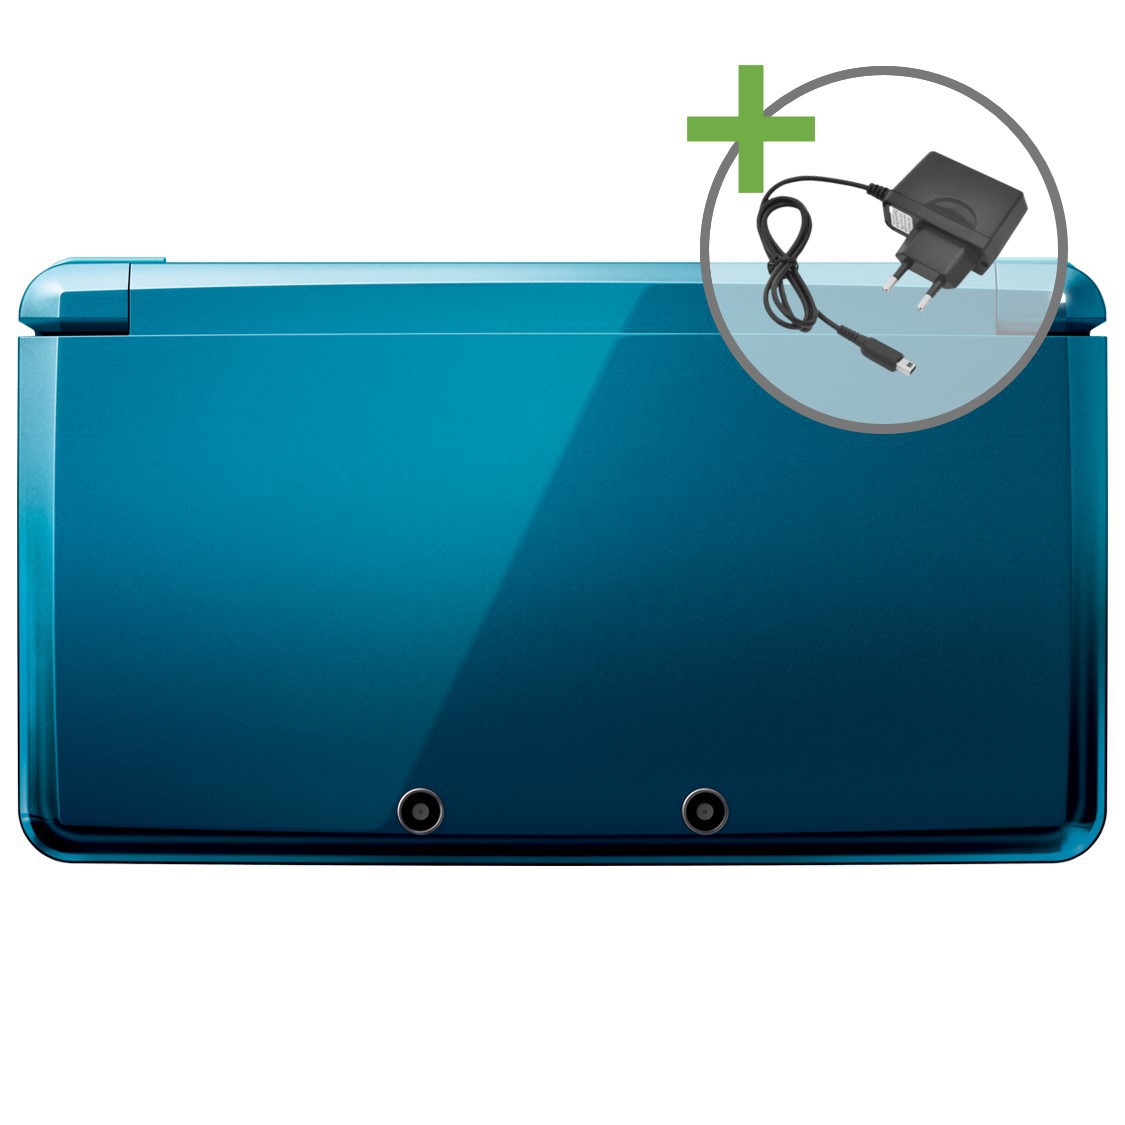 Nintendo 3DS - Aqua Blue [Complete] - Nintendo 3DS Hardware - 4